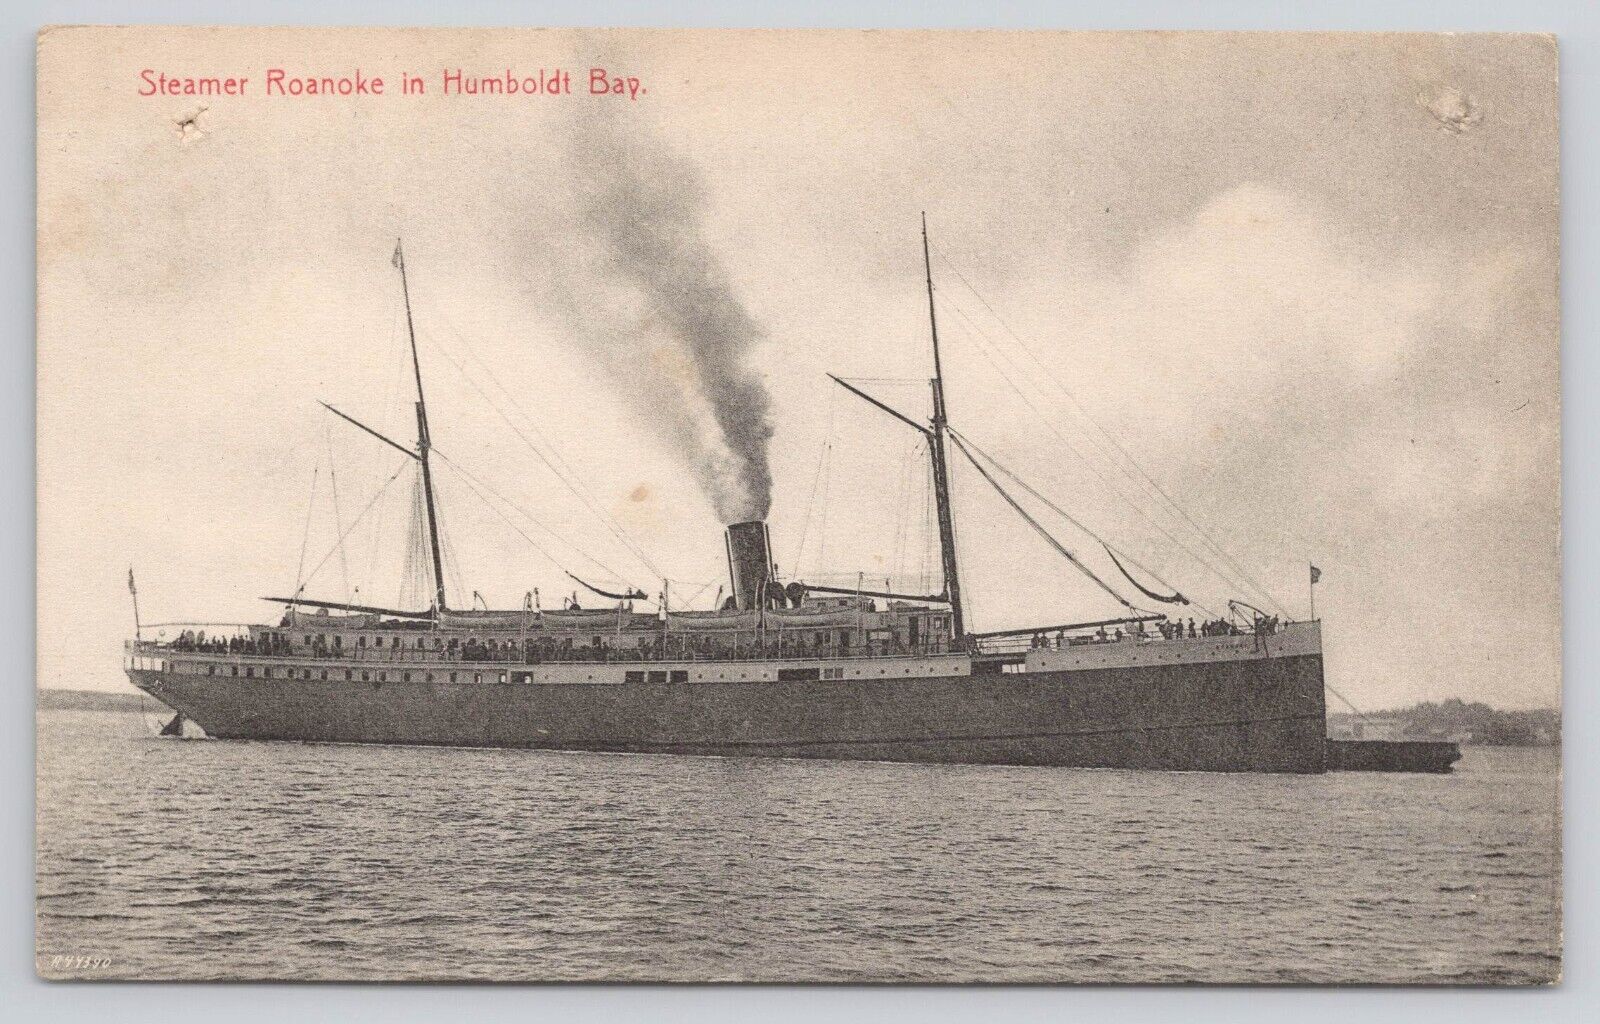 Humboldt Bay, California EARLY Steamer S.S. Roanoke Photo Postcard